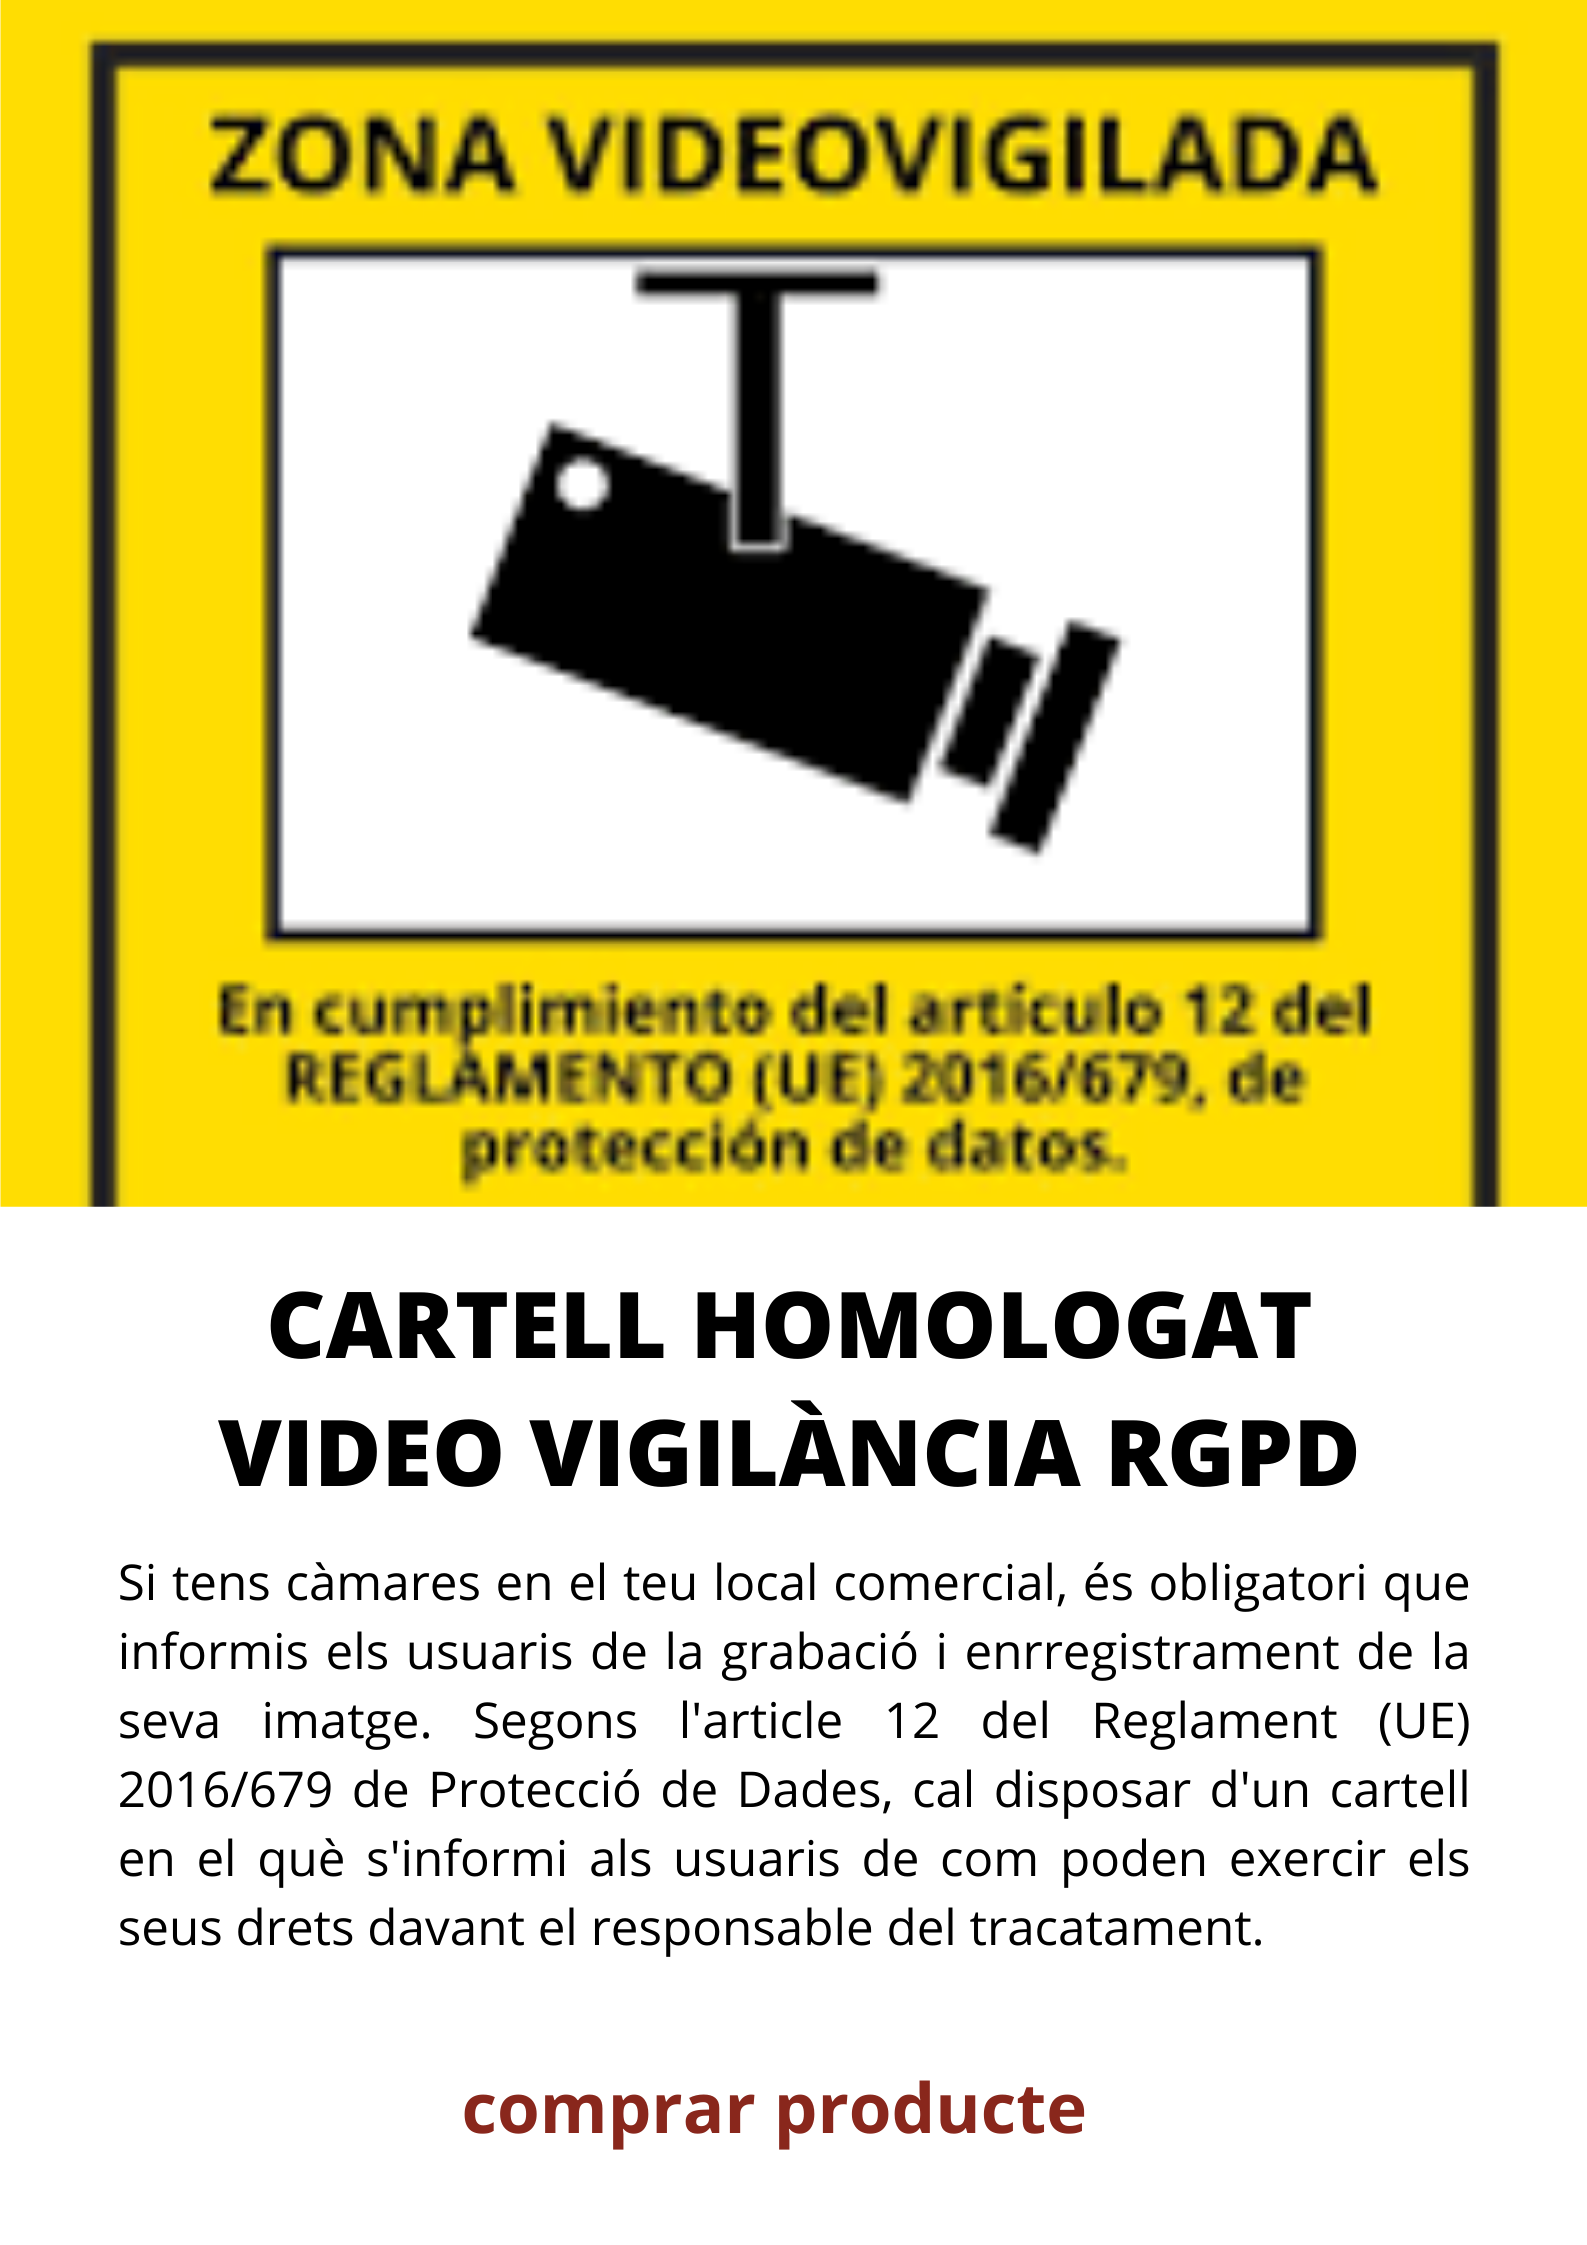 cartell homologat rgpd video